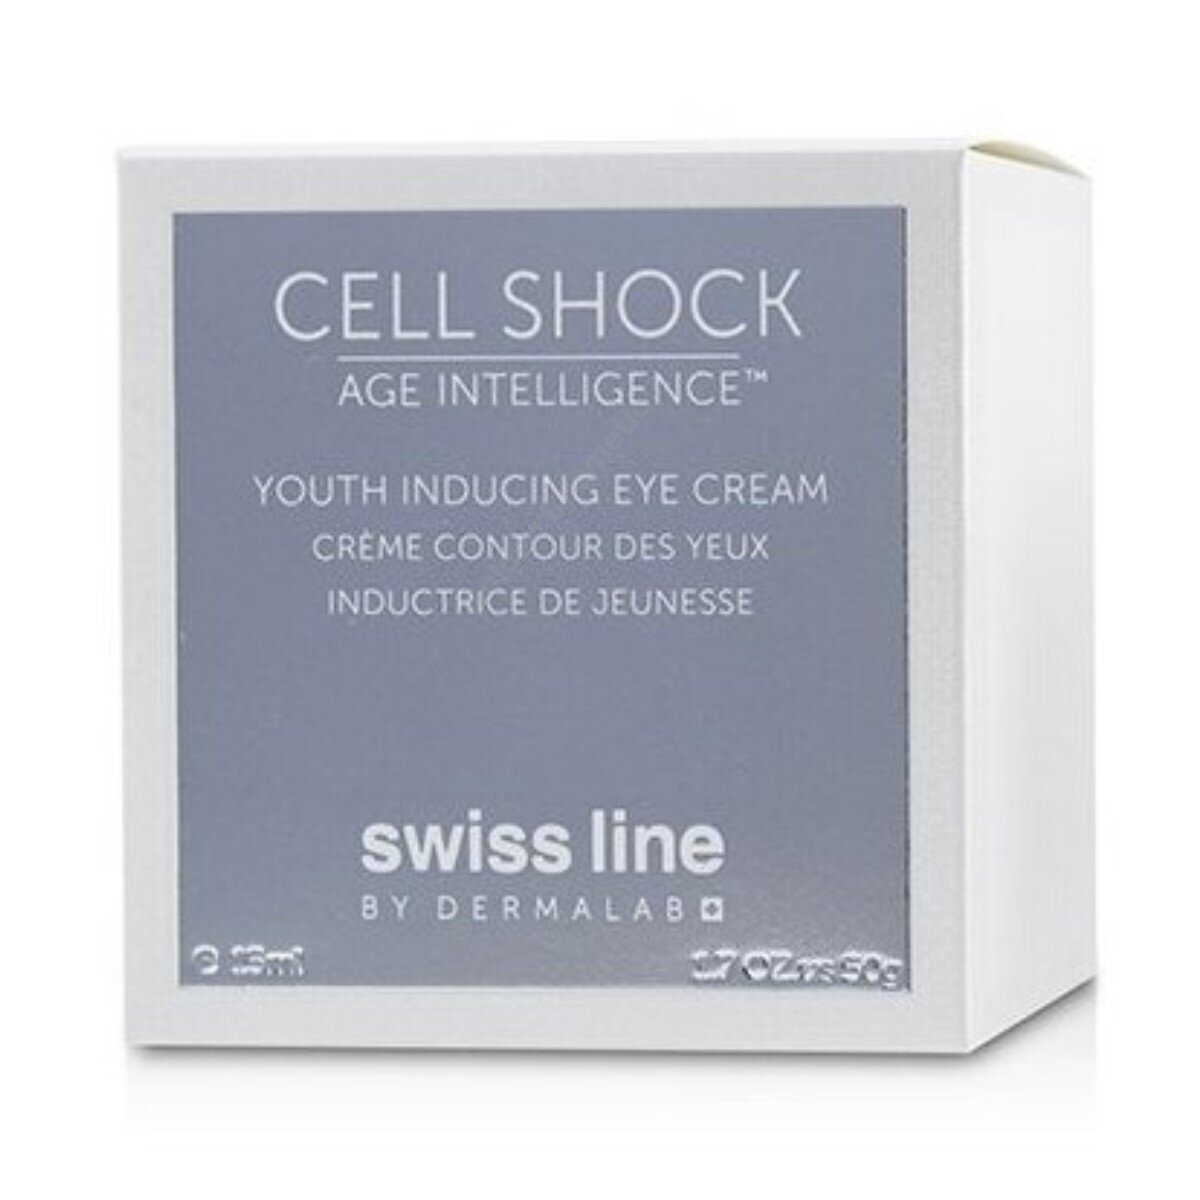 CELL SHOCK CS Age Intelligence Youth Inducing Eye Cream 15ml (Authorized Good)